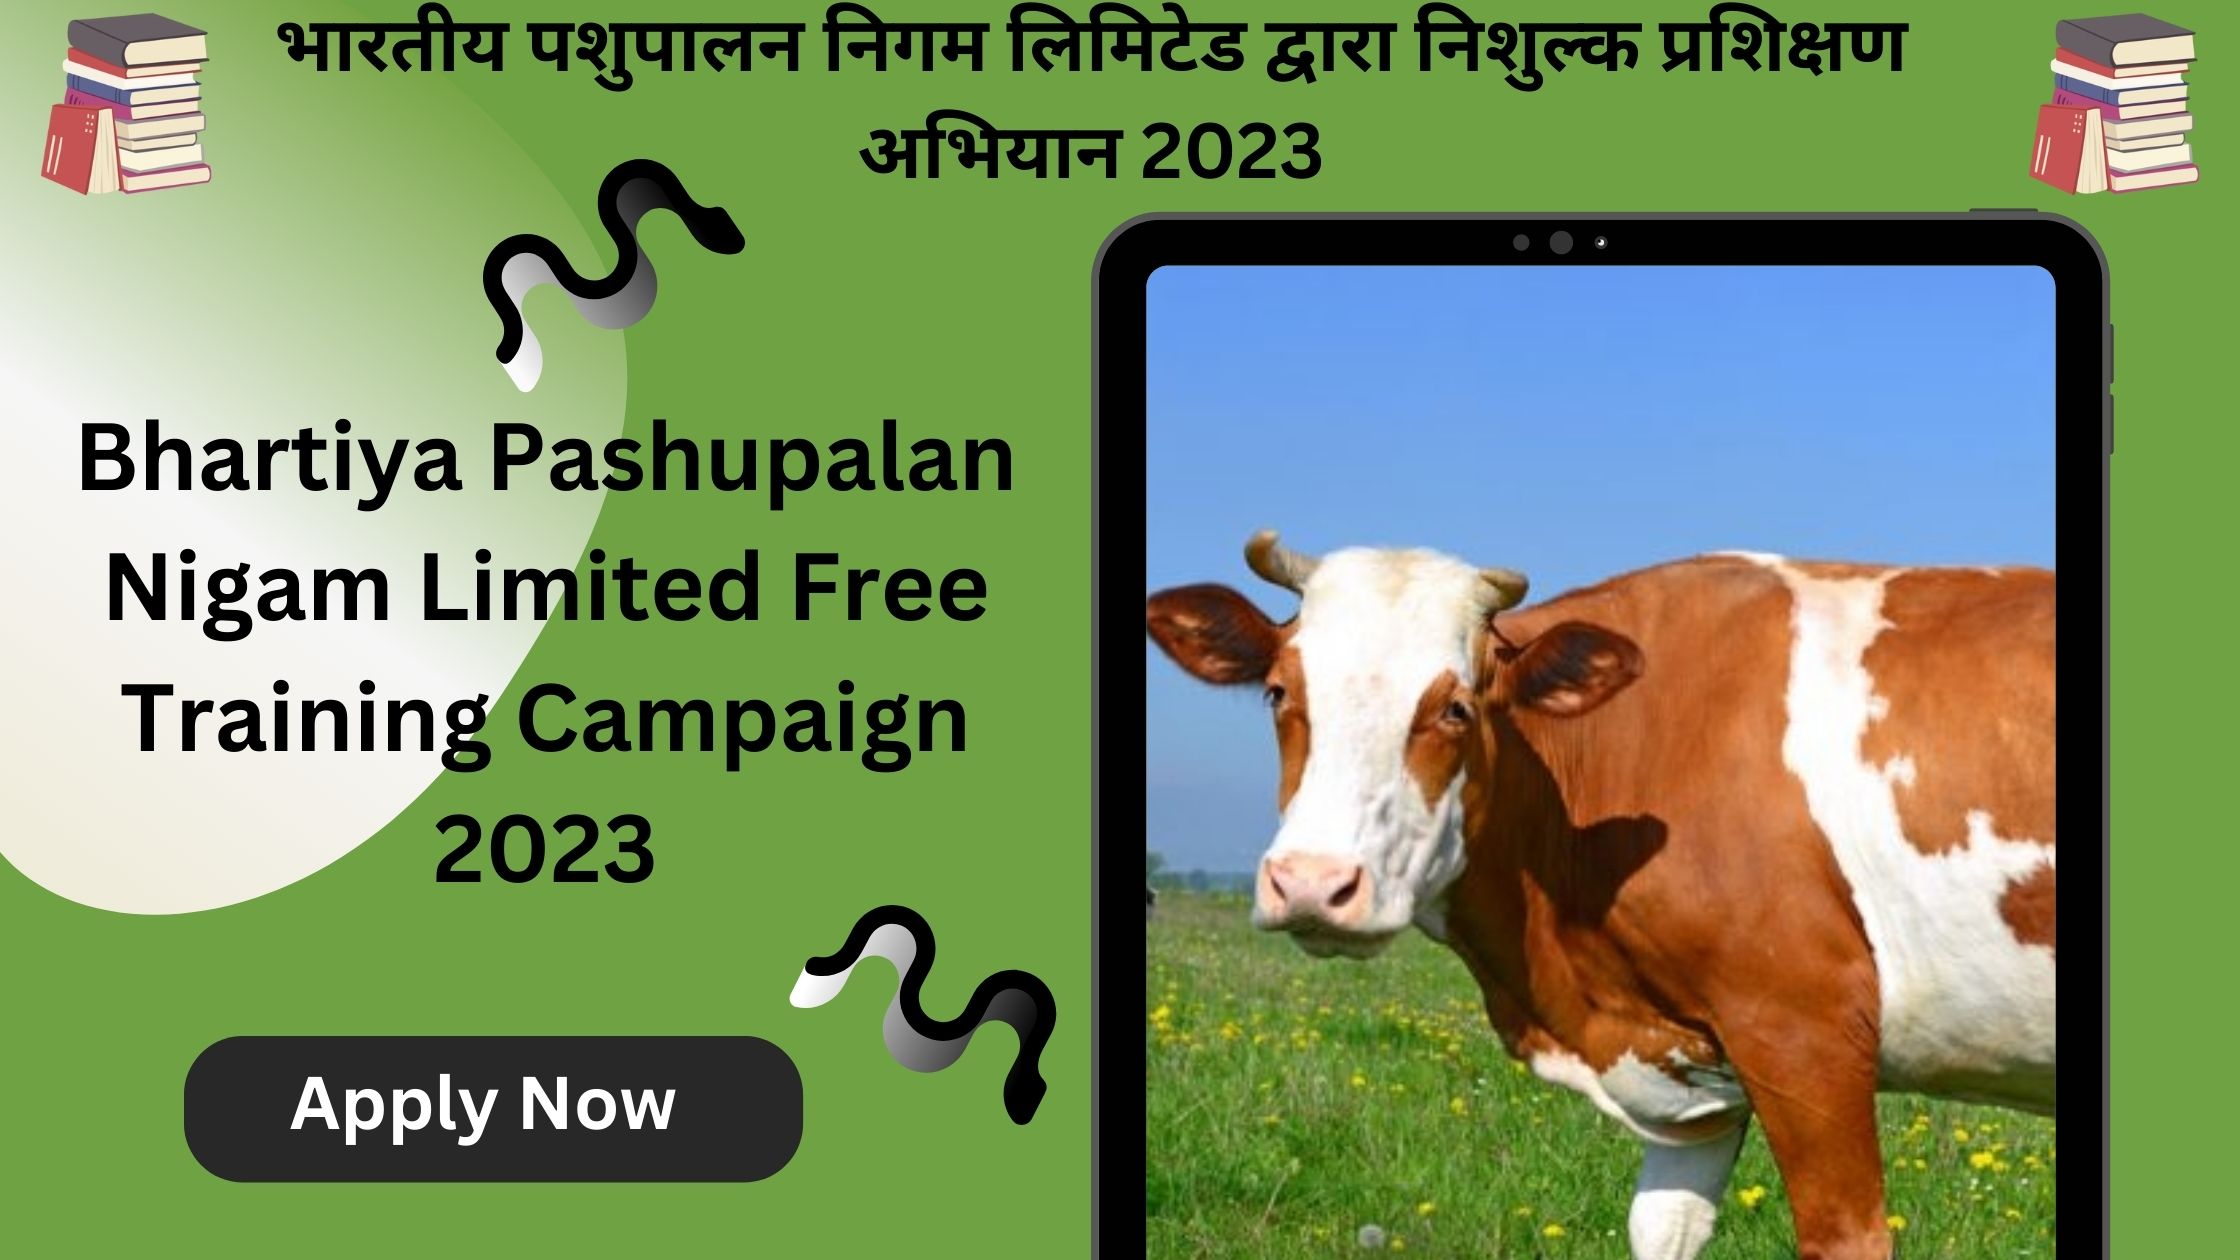 Bhartiya Pashupalan Nigam Limited Free Training Campaign 2023